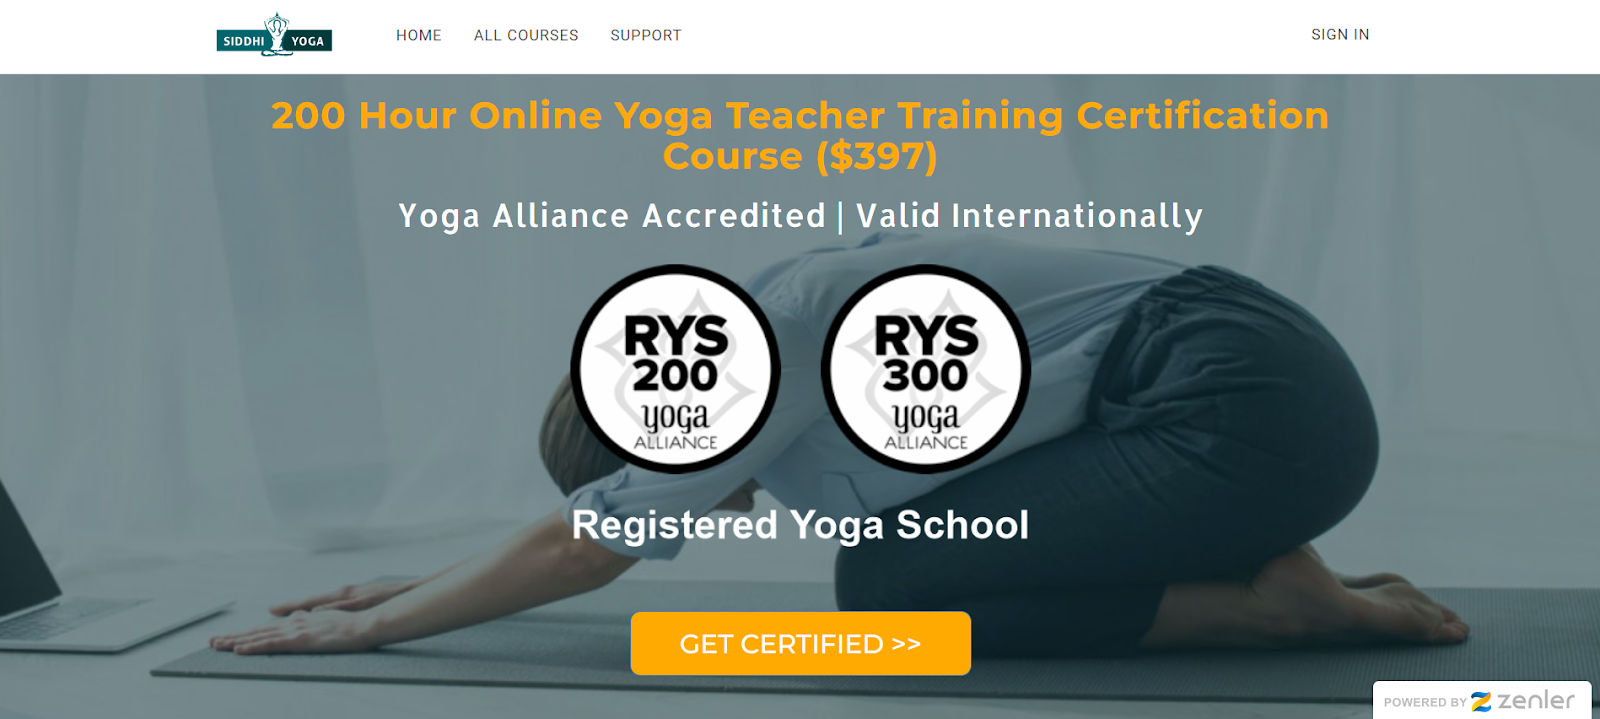 200 hour online yoga teacher